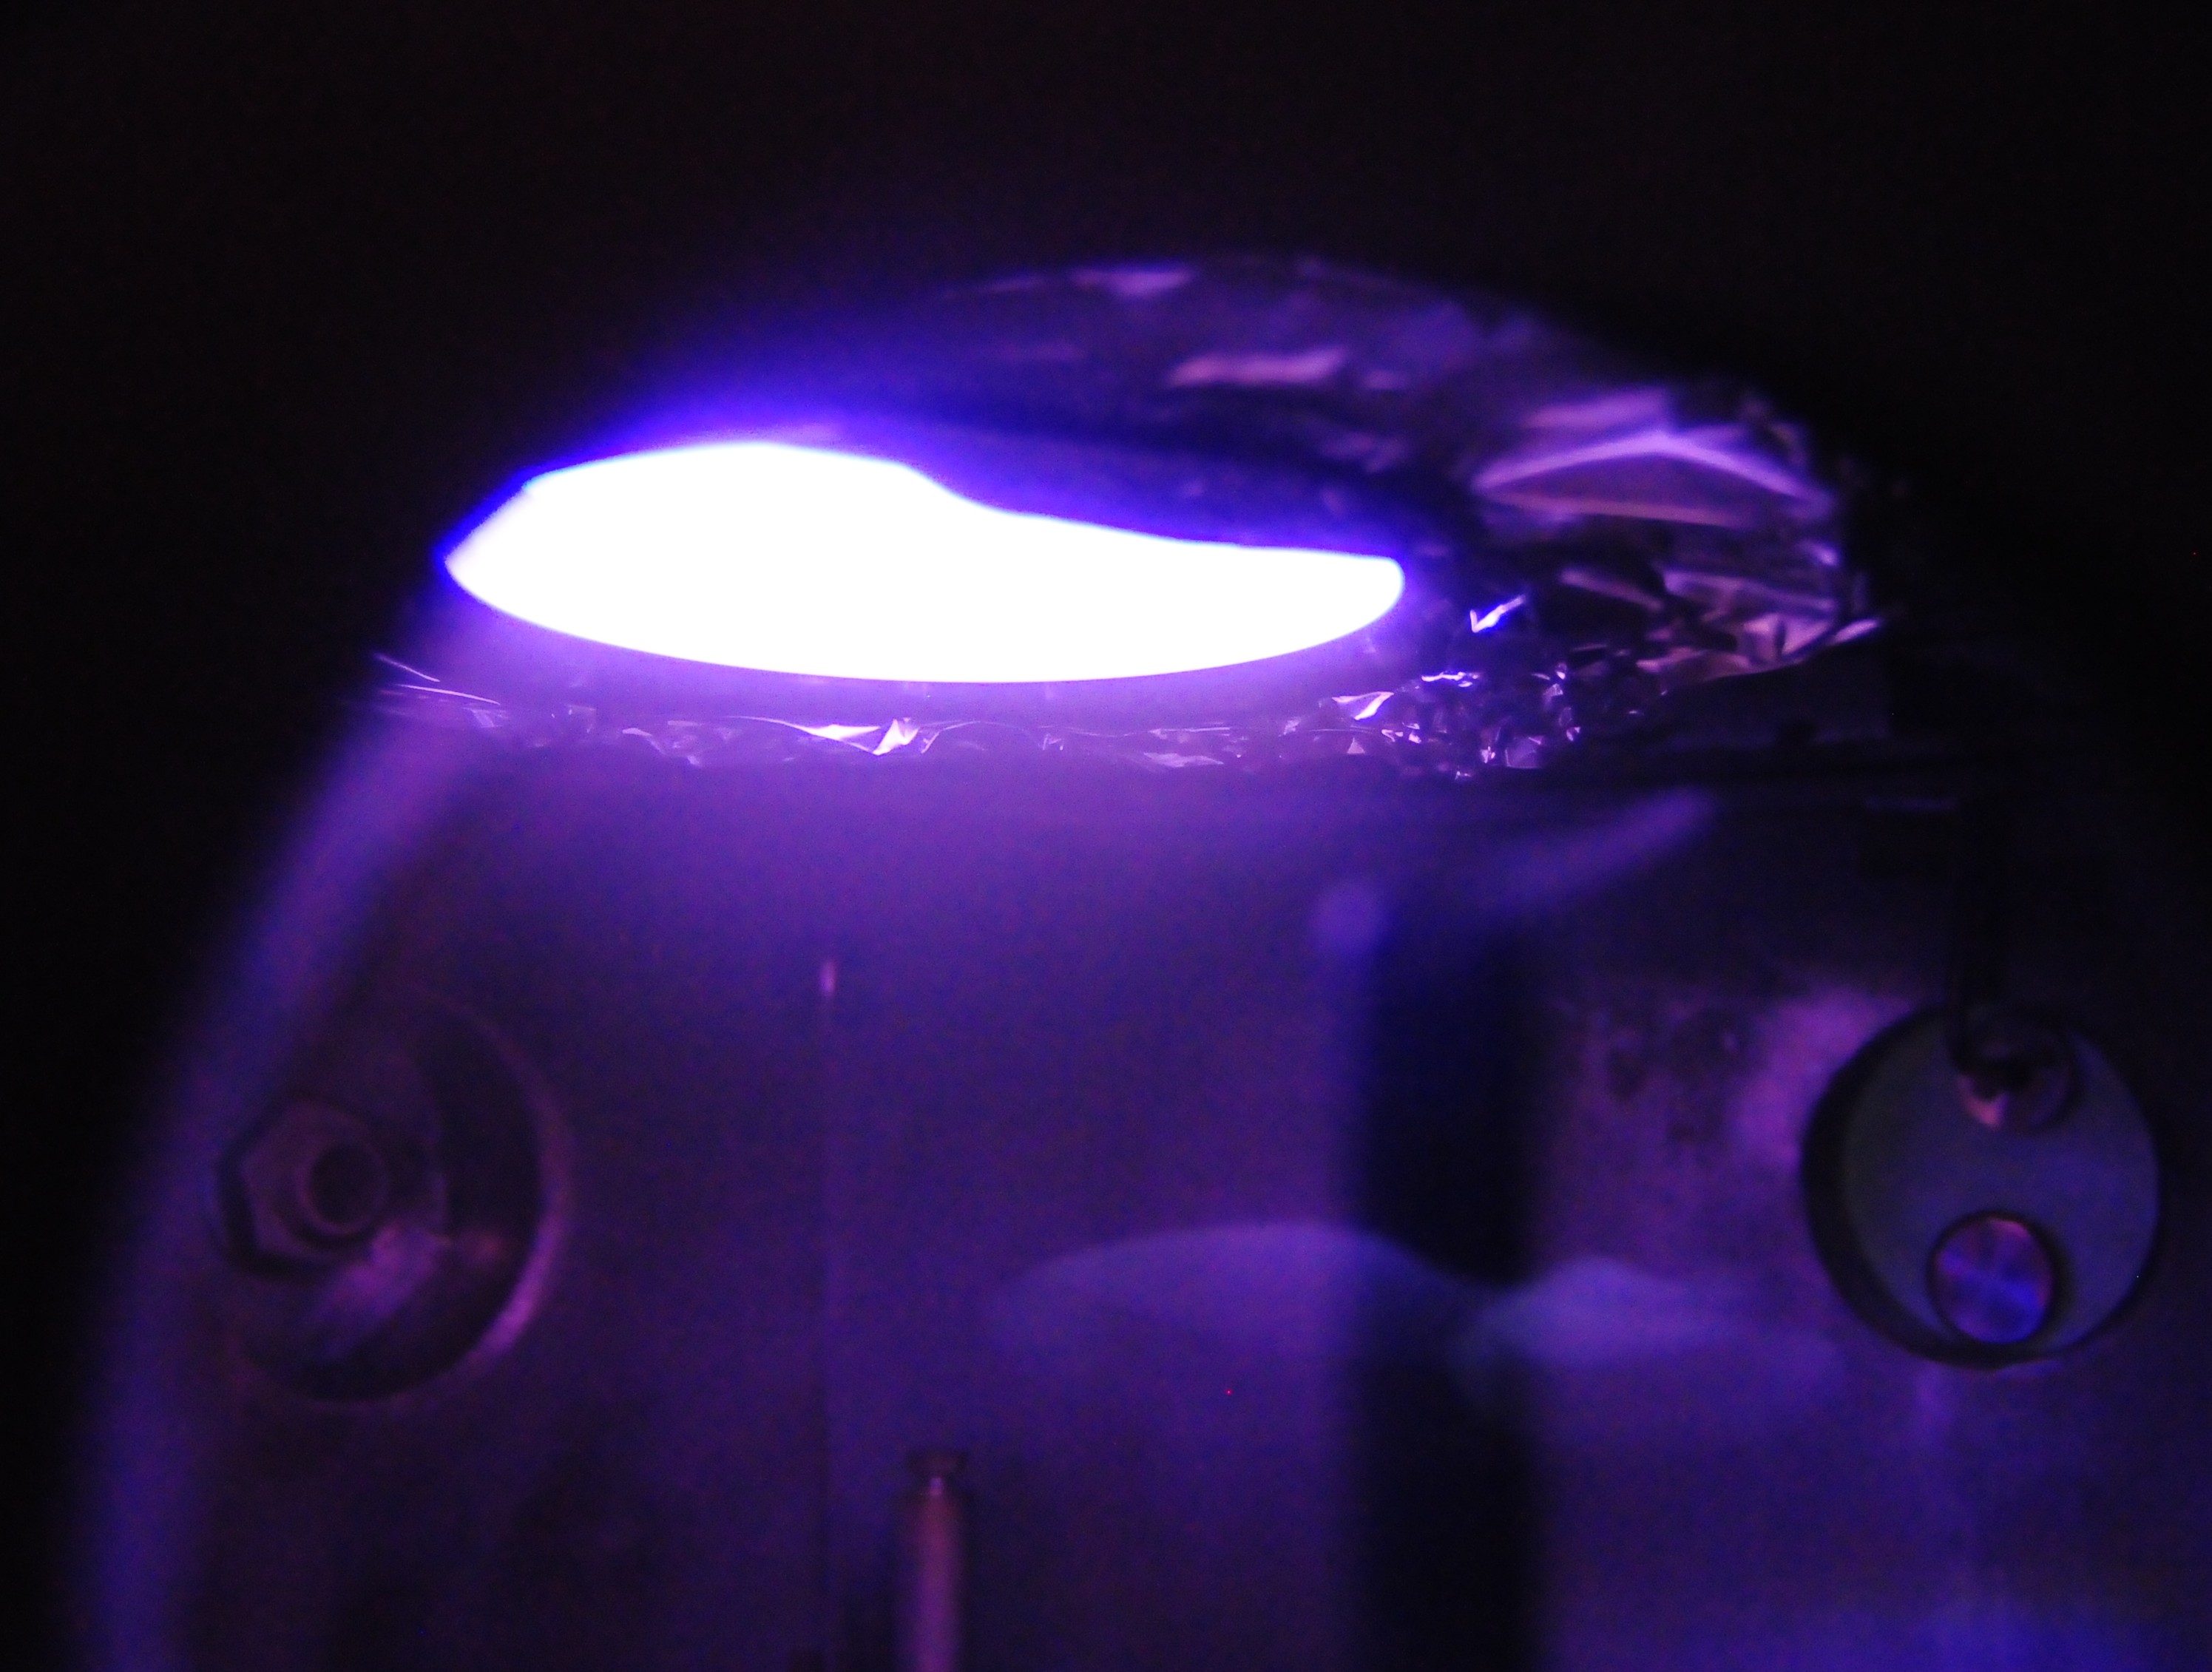 ONYX-4 Hollow Cathode Plasma